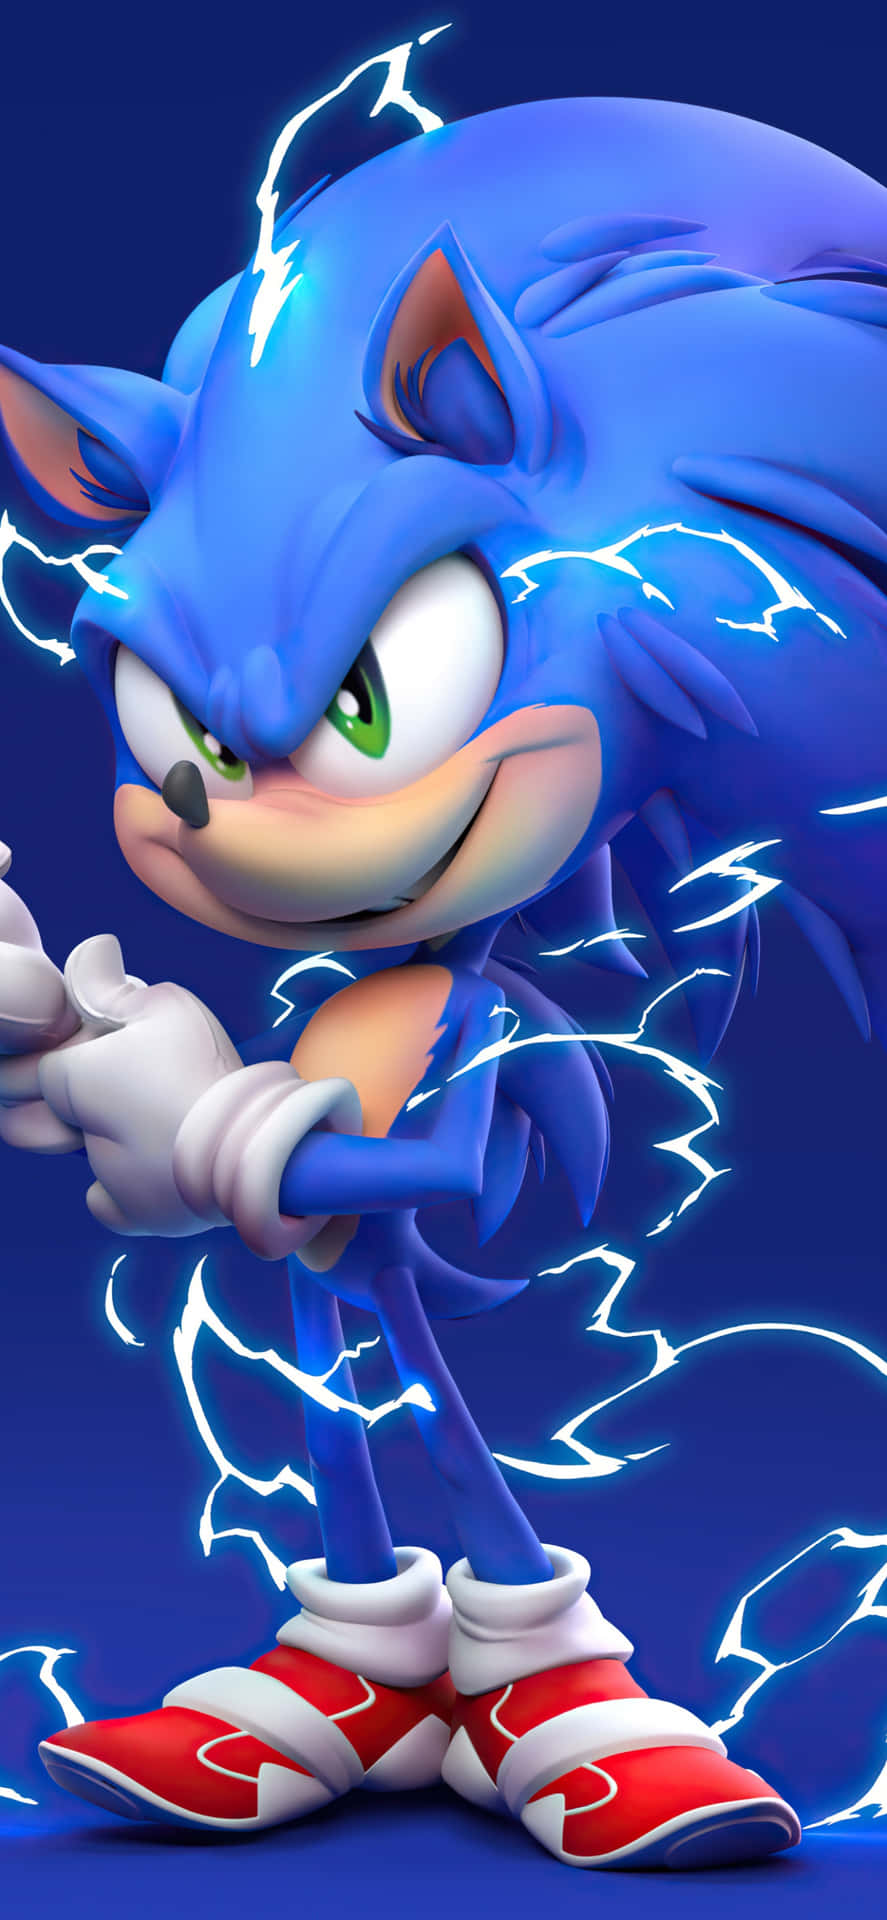 Sonic The Hedgehog enjoying a moment of freedom